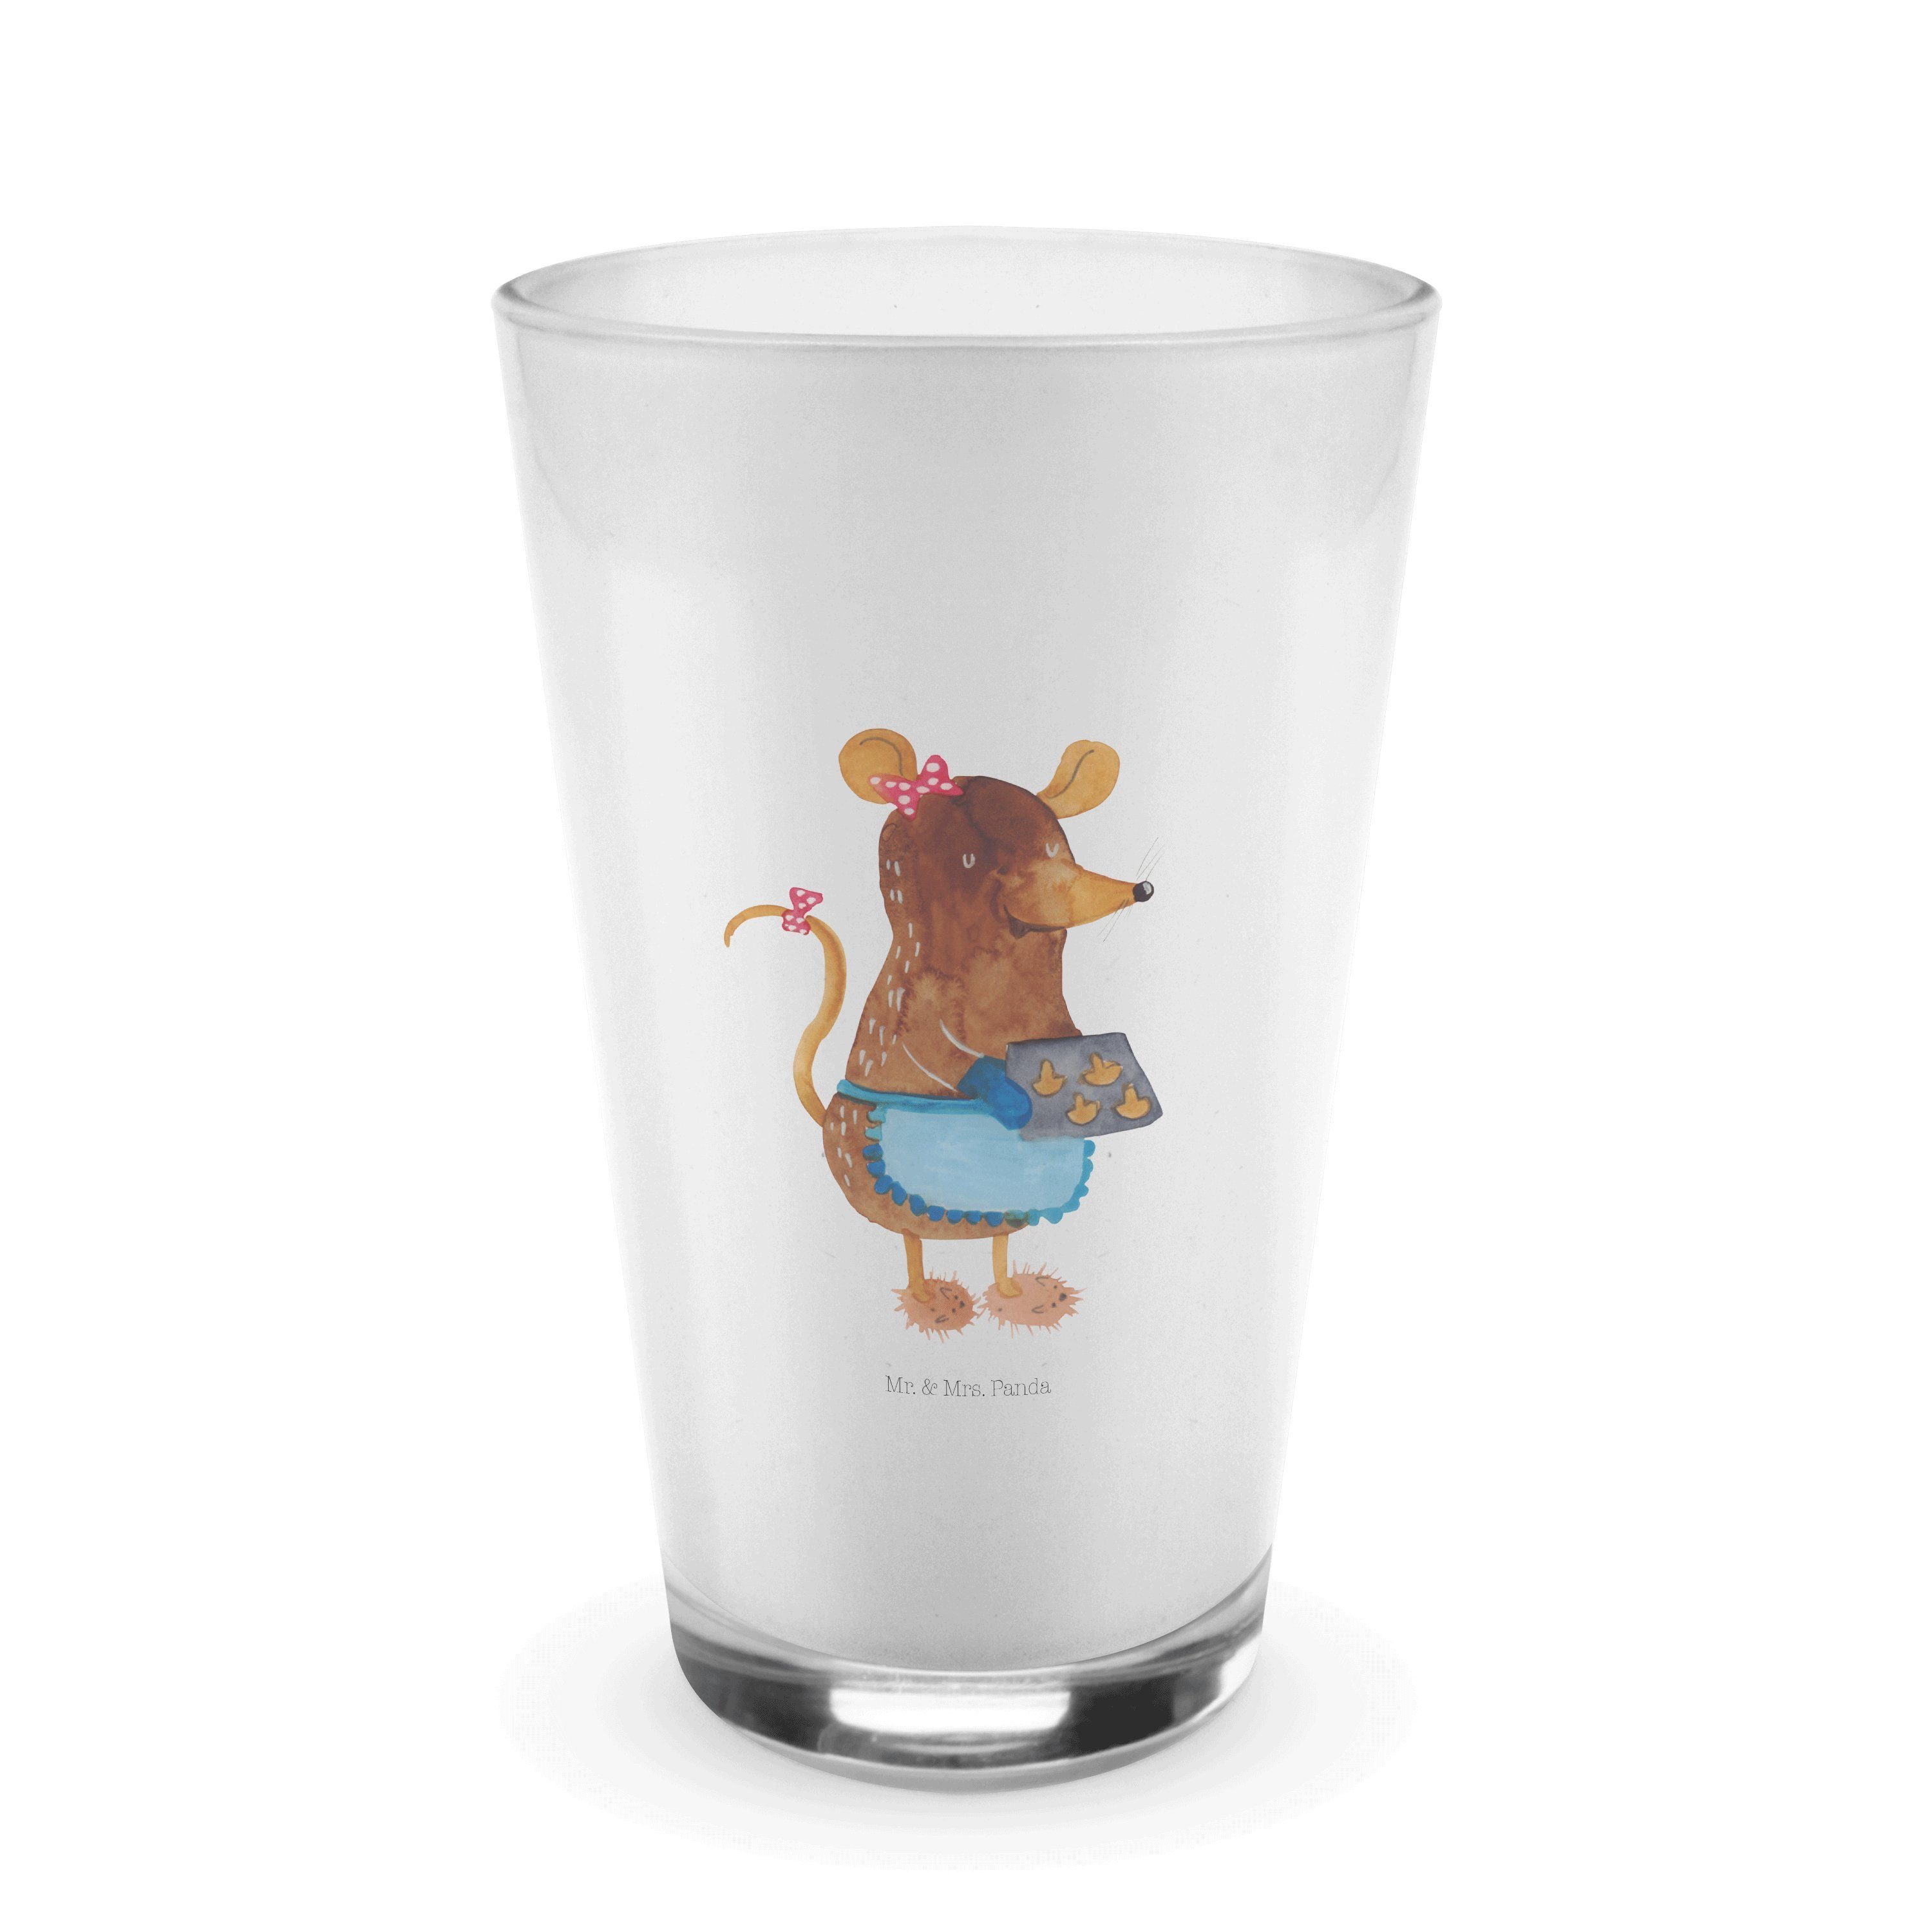 Mr. & Mrs. Panda Glas - Kekse Maus Transparent Plätzch, Geschenk, - Cappuccino Glas, Premium Glas Winter